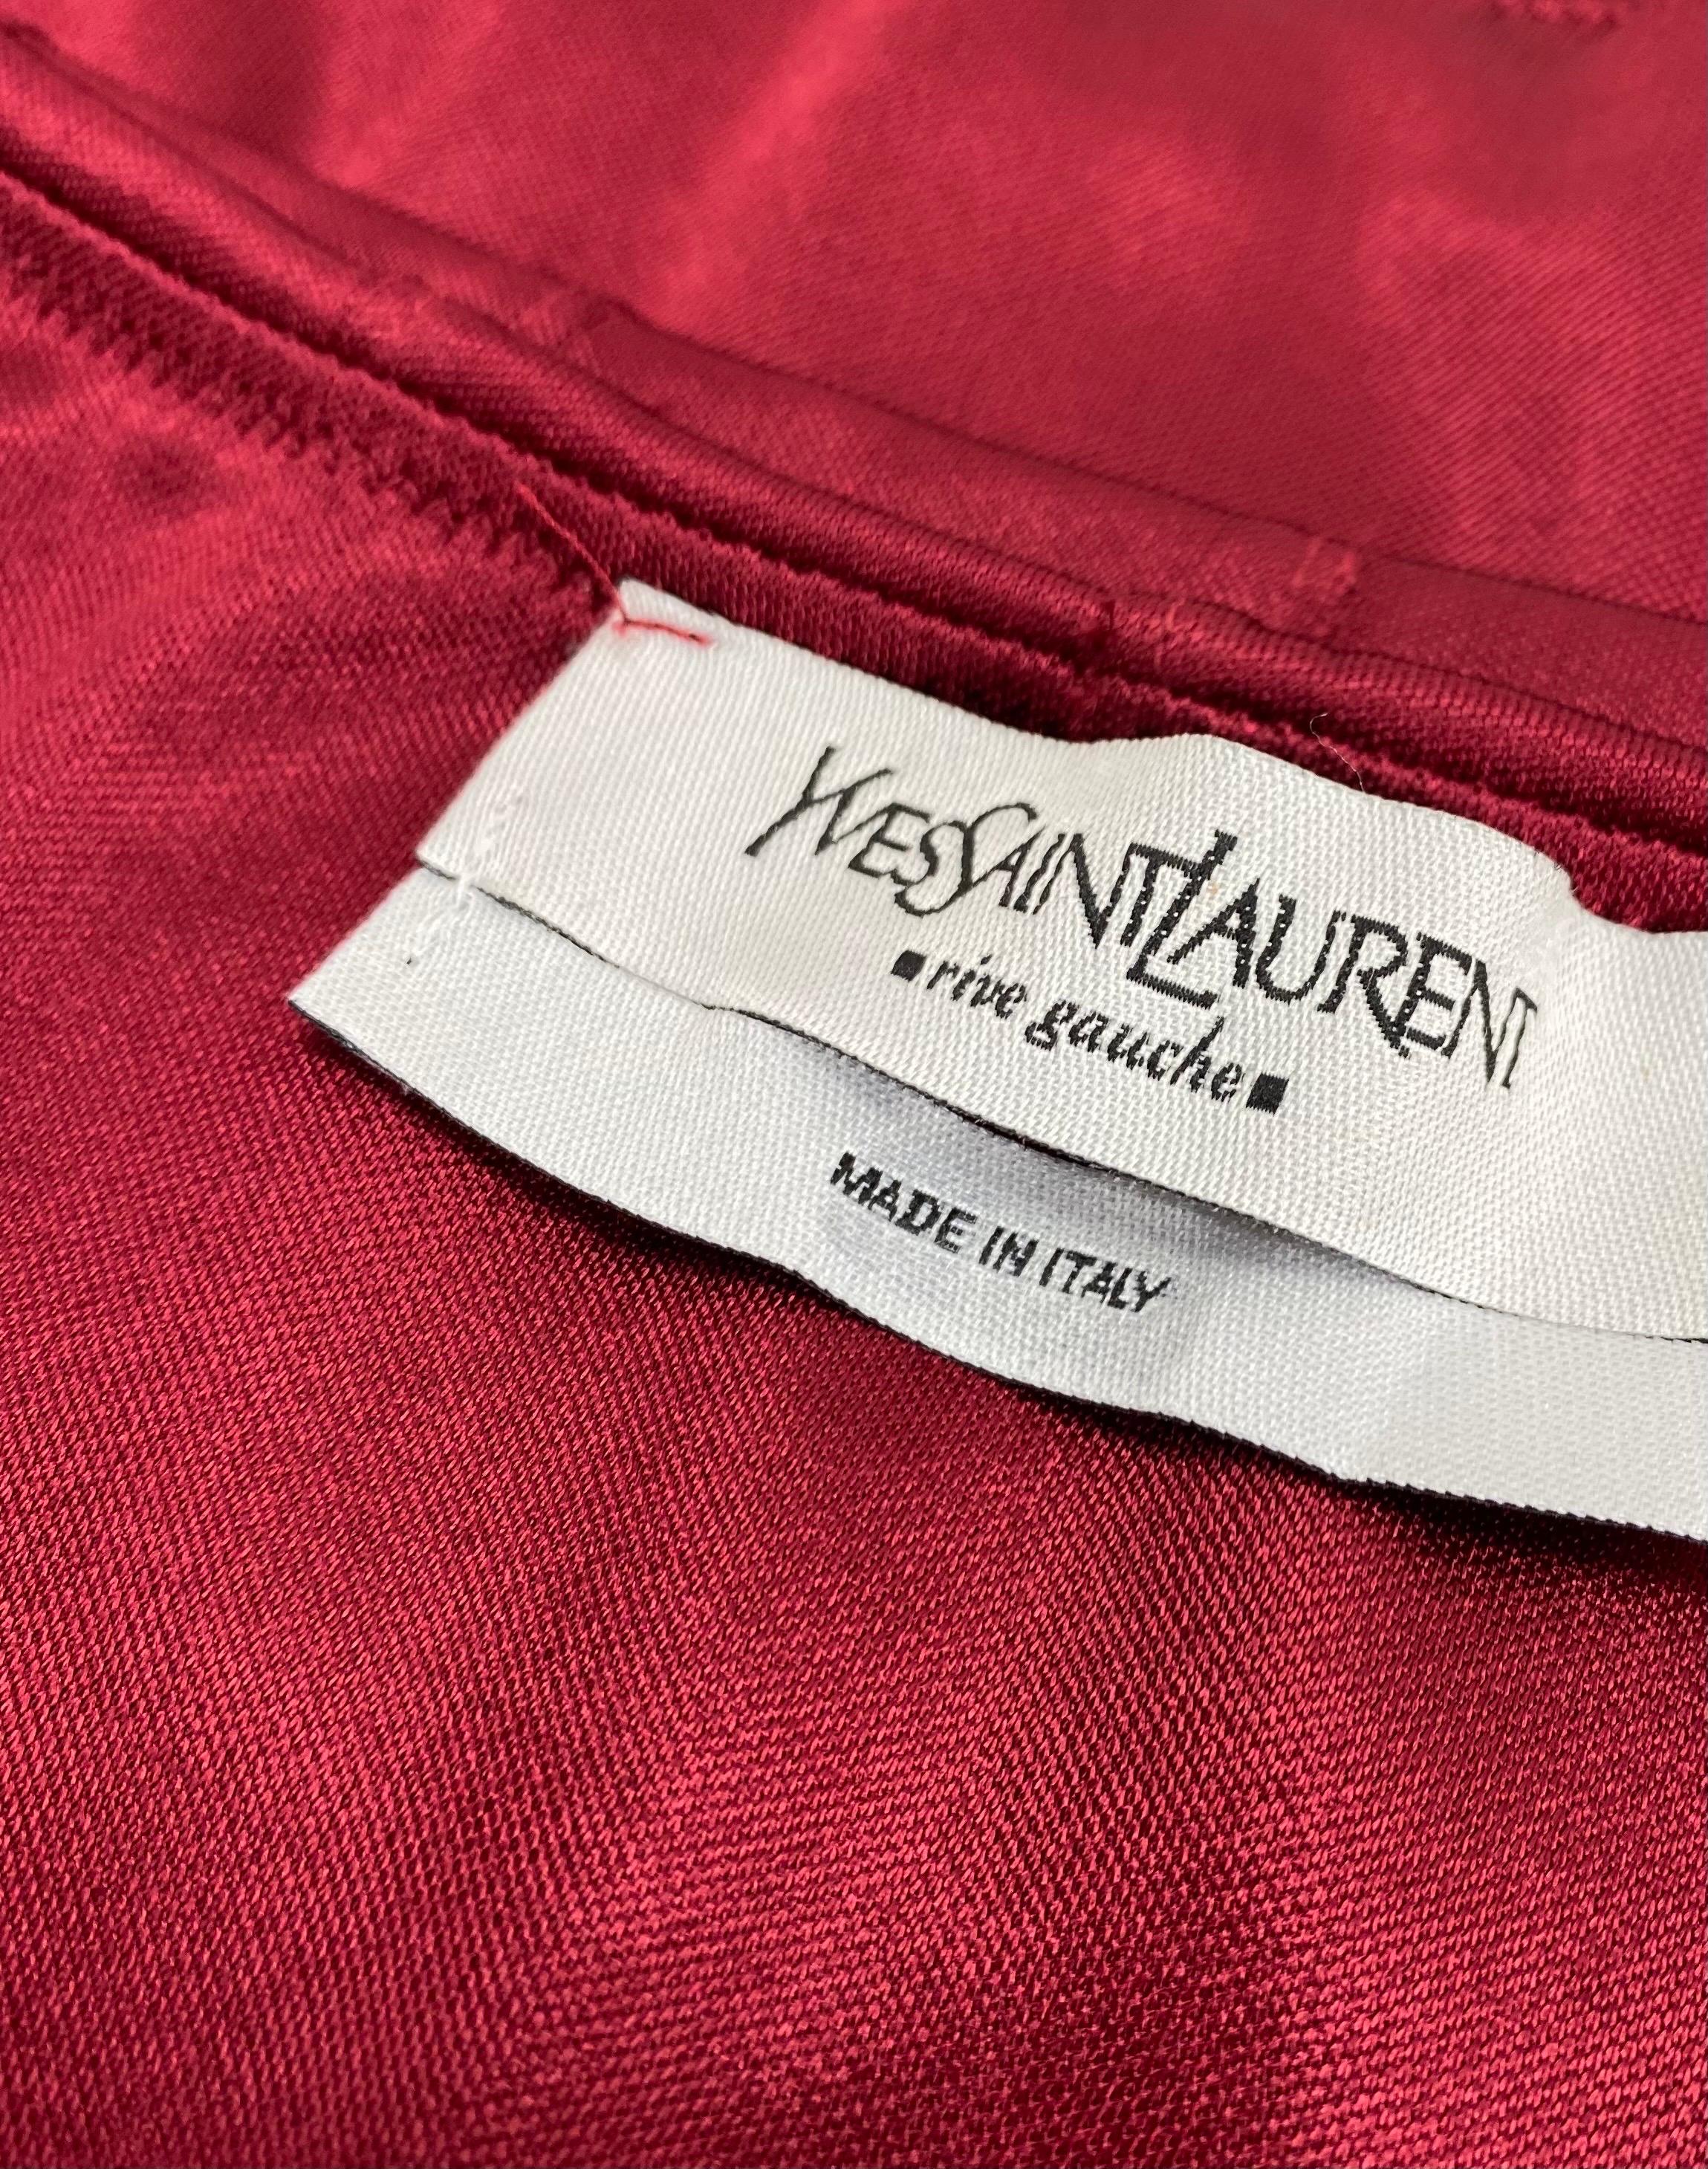 Tom Ford for YSL - Tailleur jupe en jersey rouge bordeaux, taille S, automne-hiver 2004 en vente 2